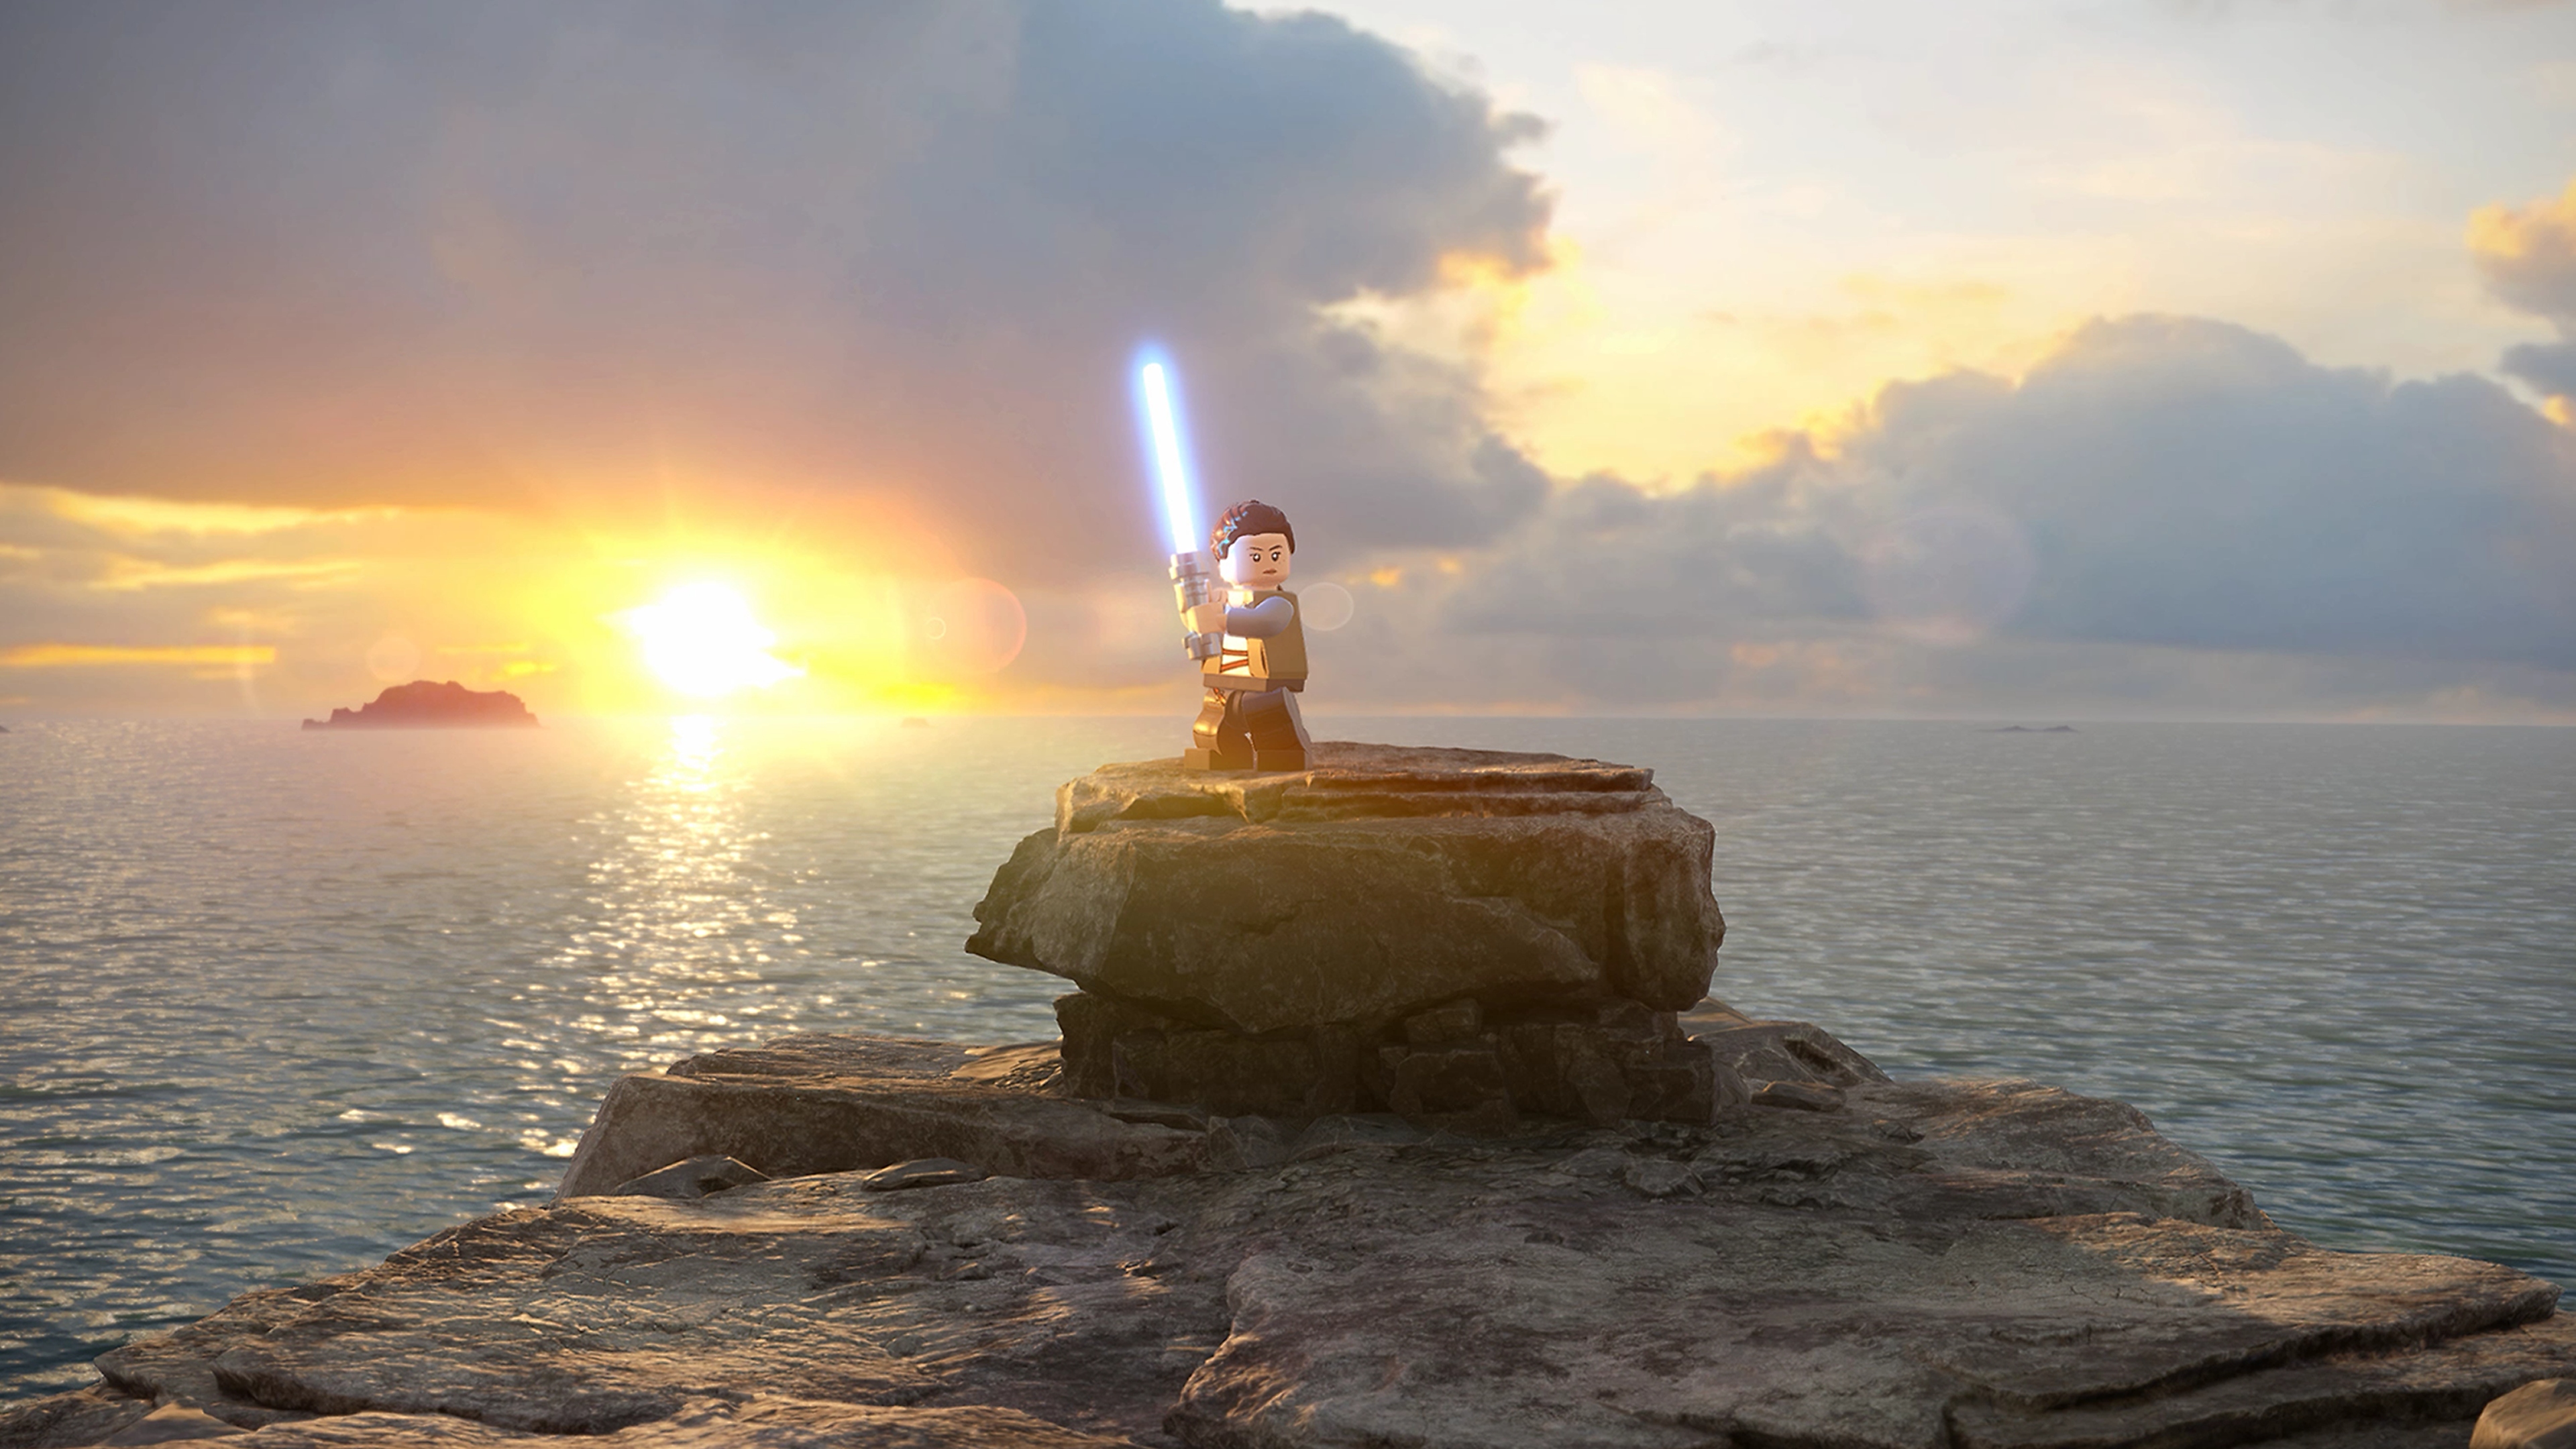 LEGO Star Wars: The Skywalker Saga – kuvakaappaus